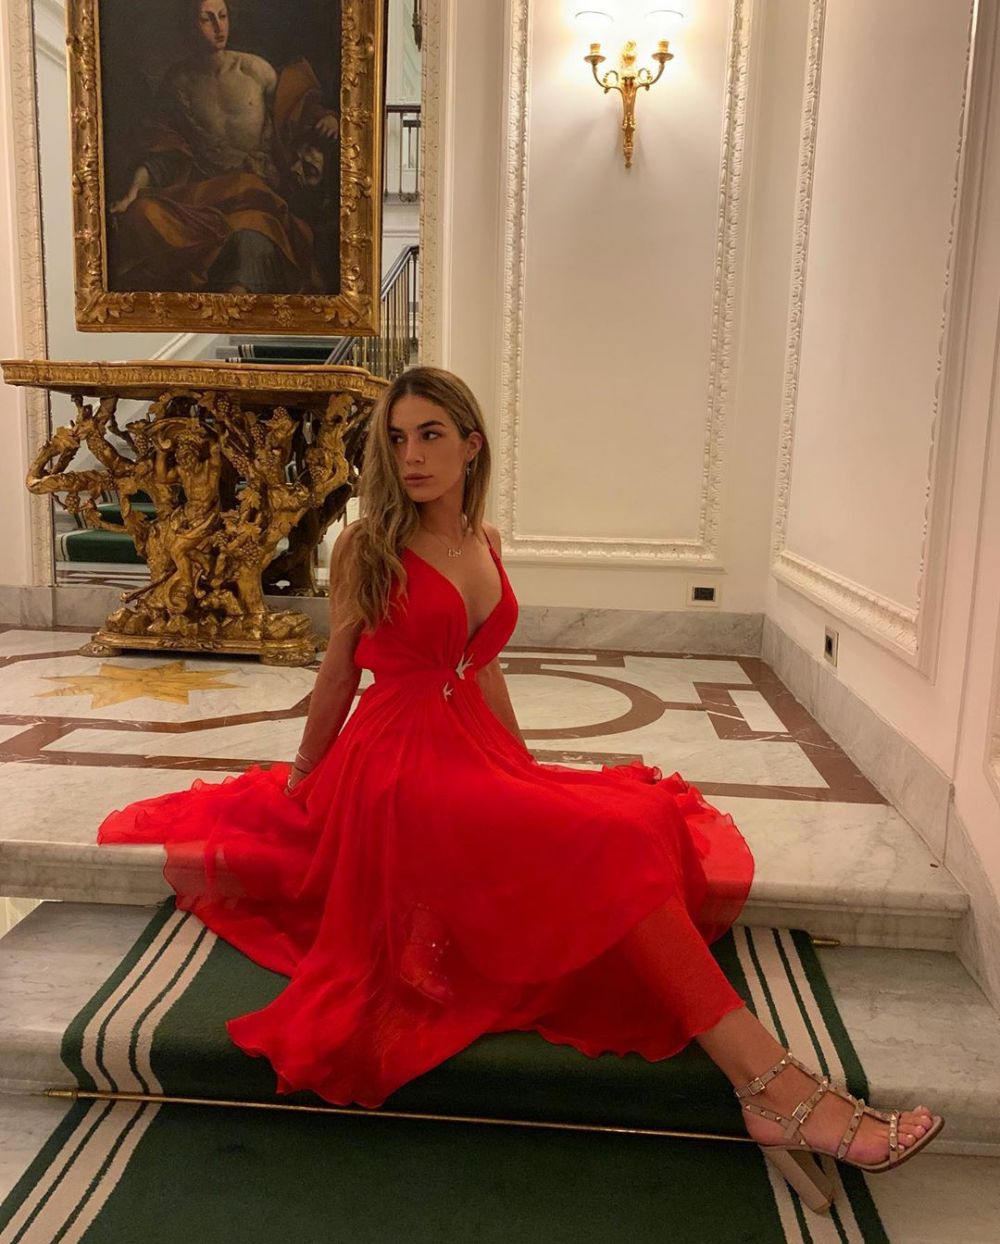 Ioana Tiriac, aparitii incendiare pe Instagram! Singura fiica a lui Ion Tiriac arata senzational _6